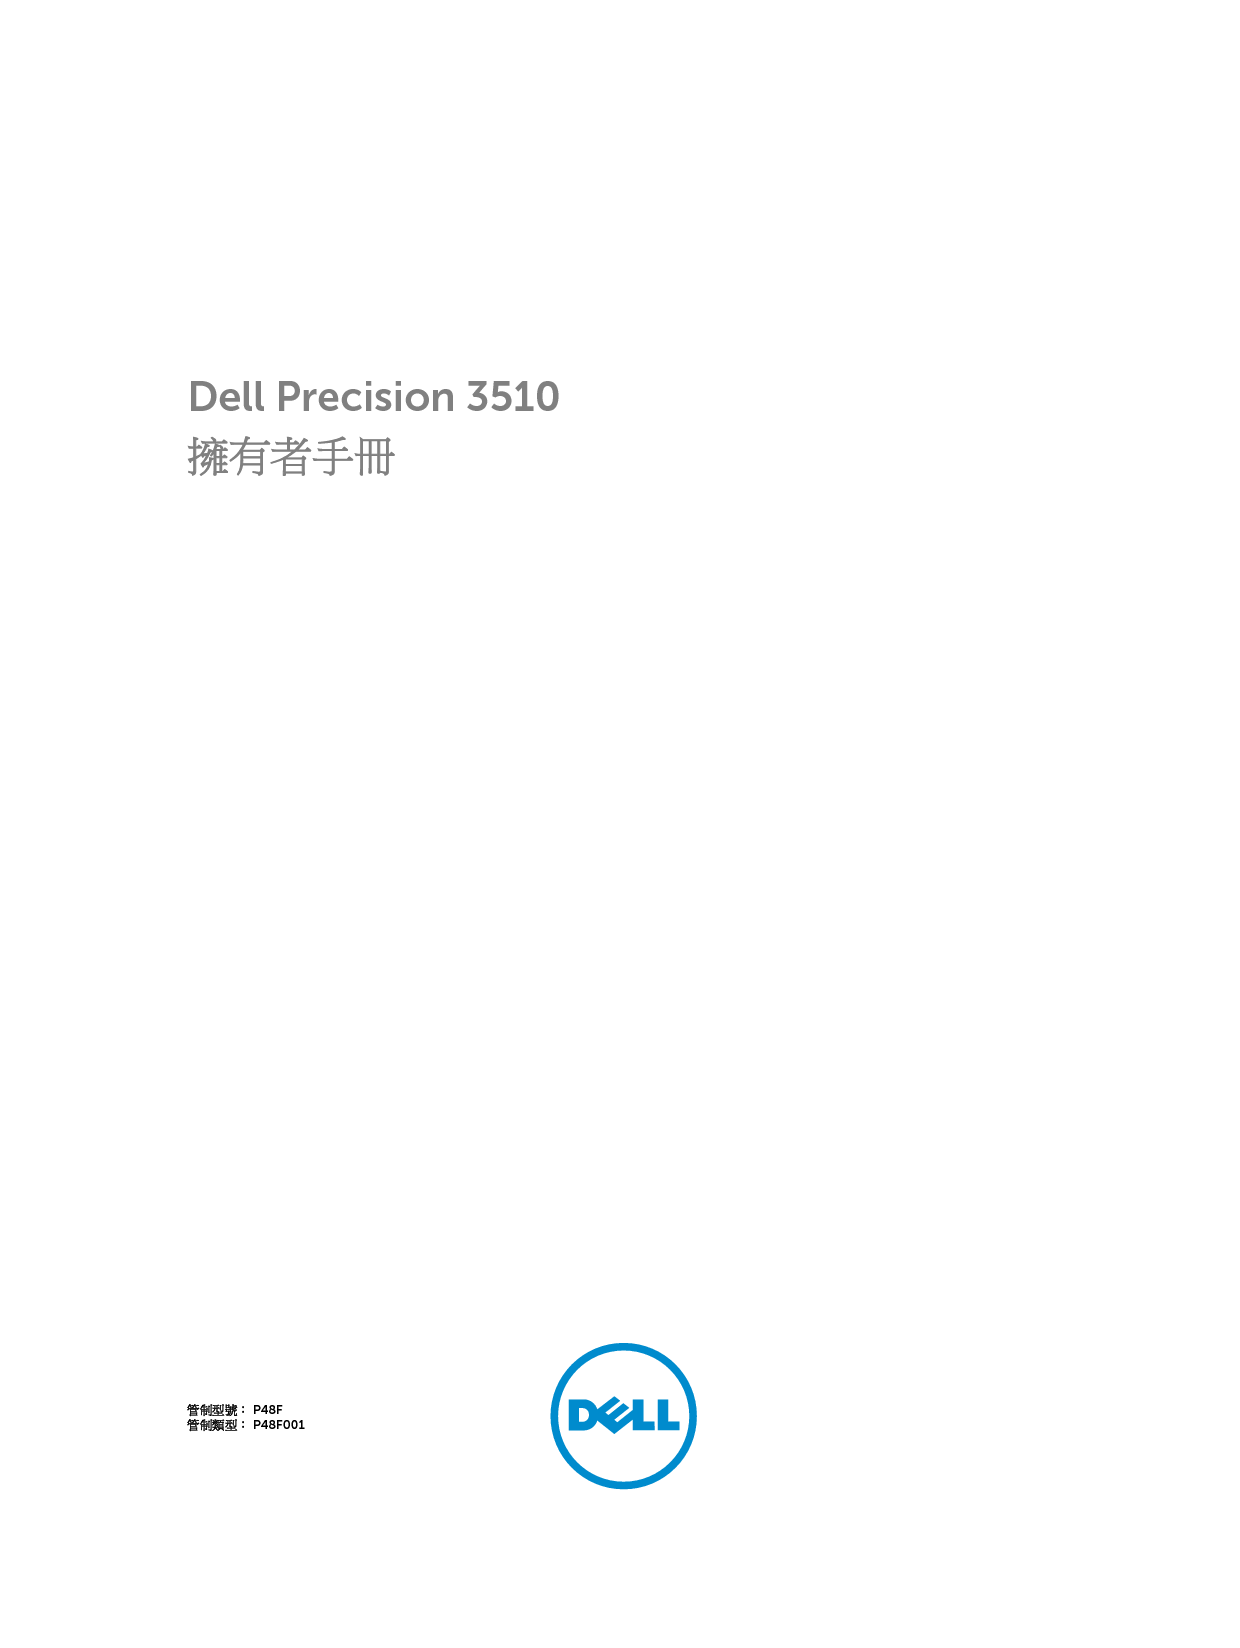 戴尔 Dell Precision M3510 繁体 用户手册 封面